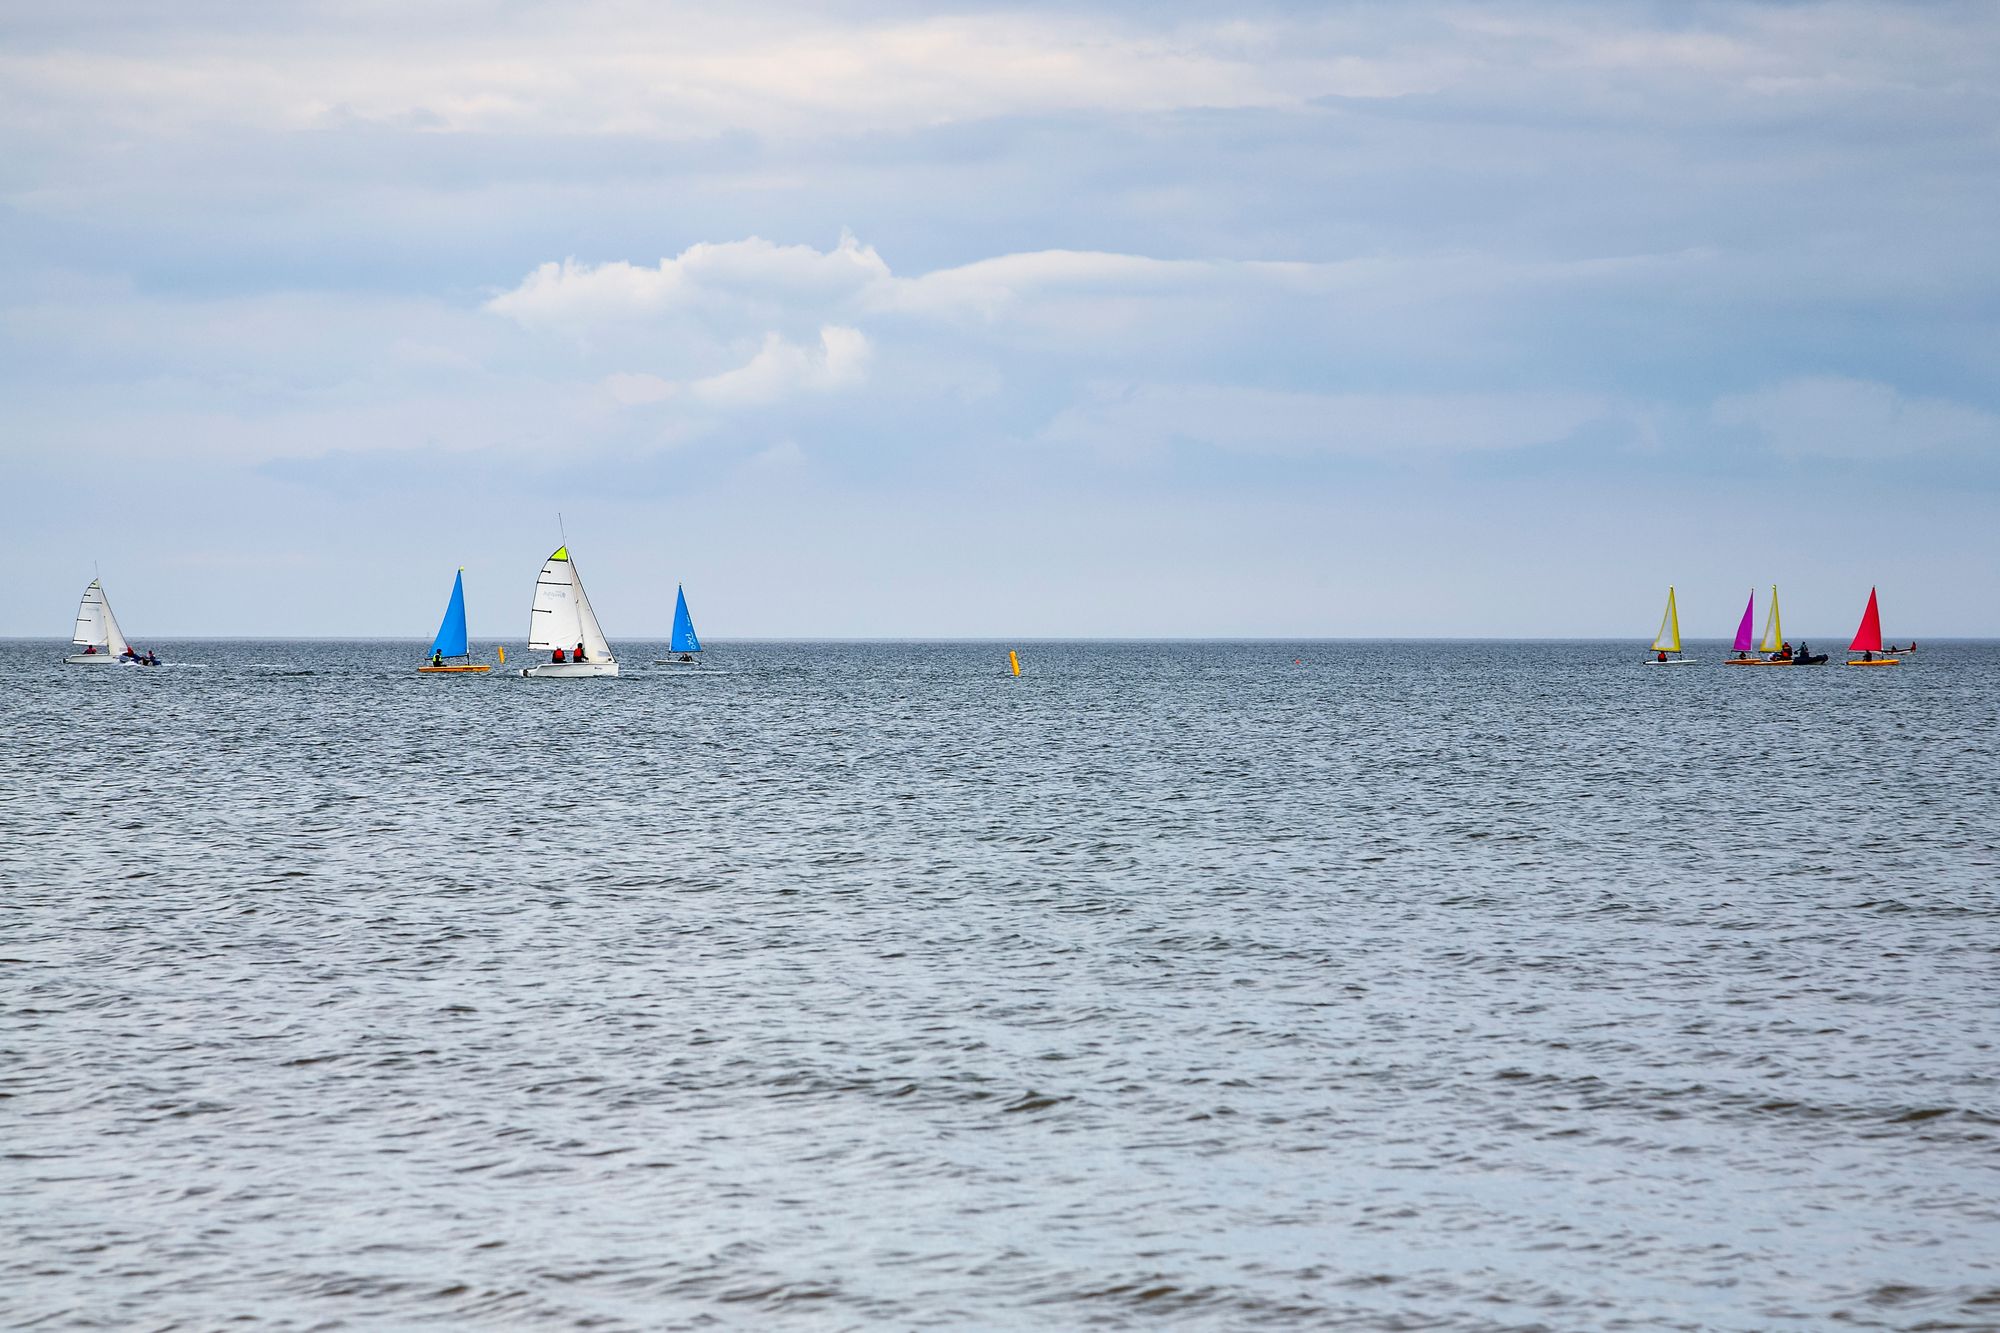 Sail boats on the North Sea